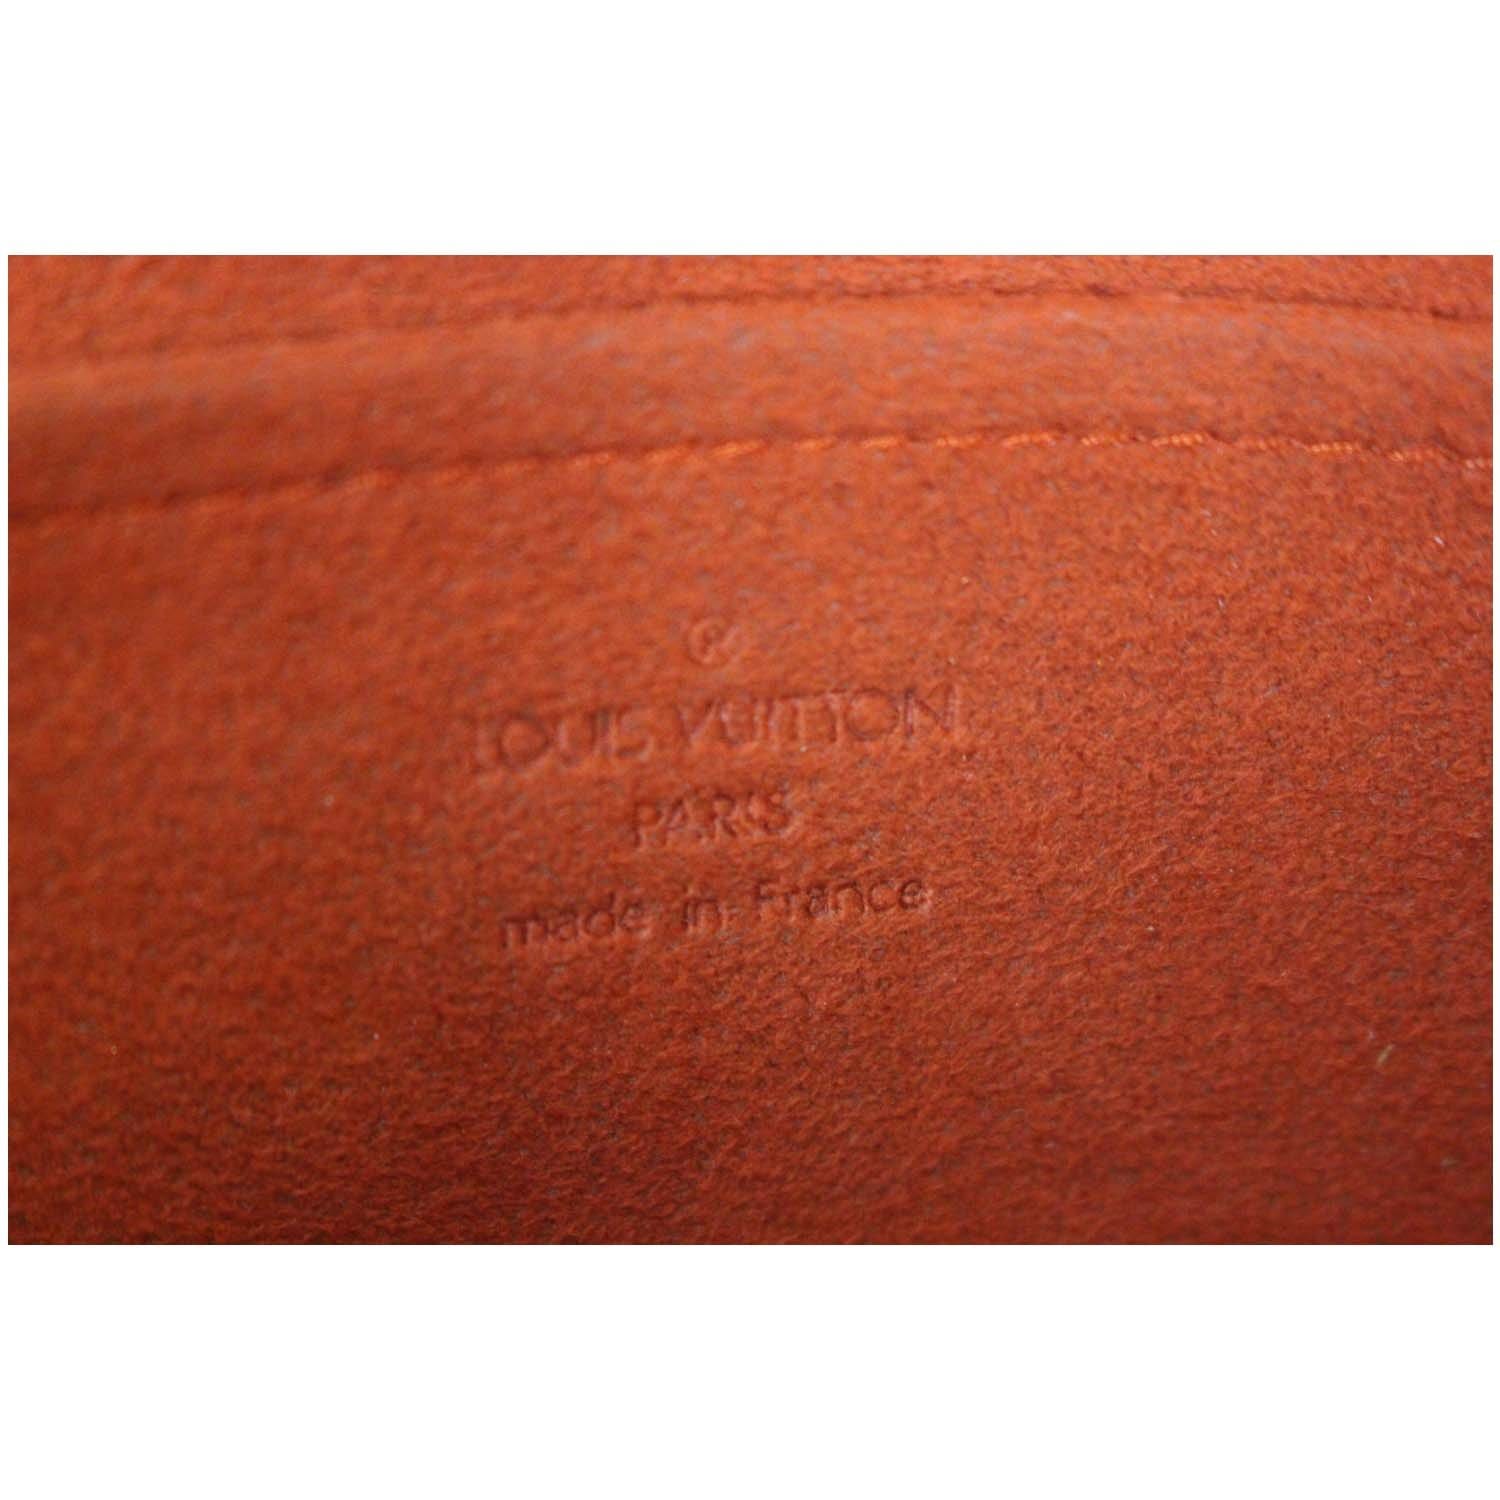 Auth Louis Vuitton Damier Recoleta Shoulder Bag Brown N51299 - e53899a